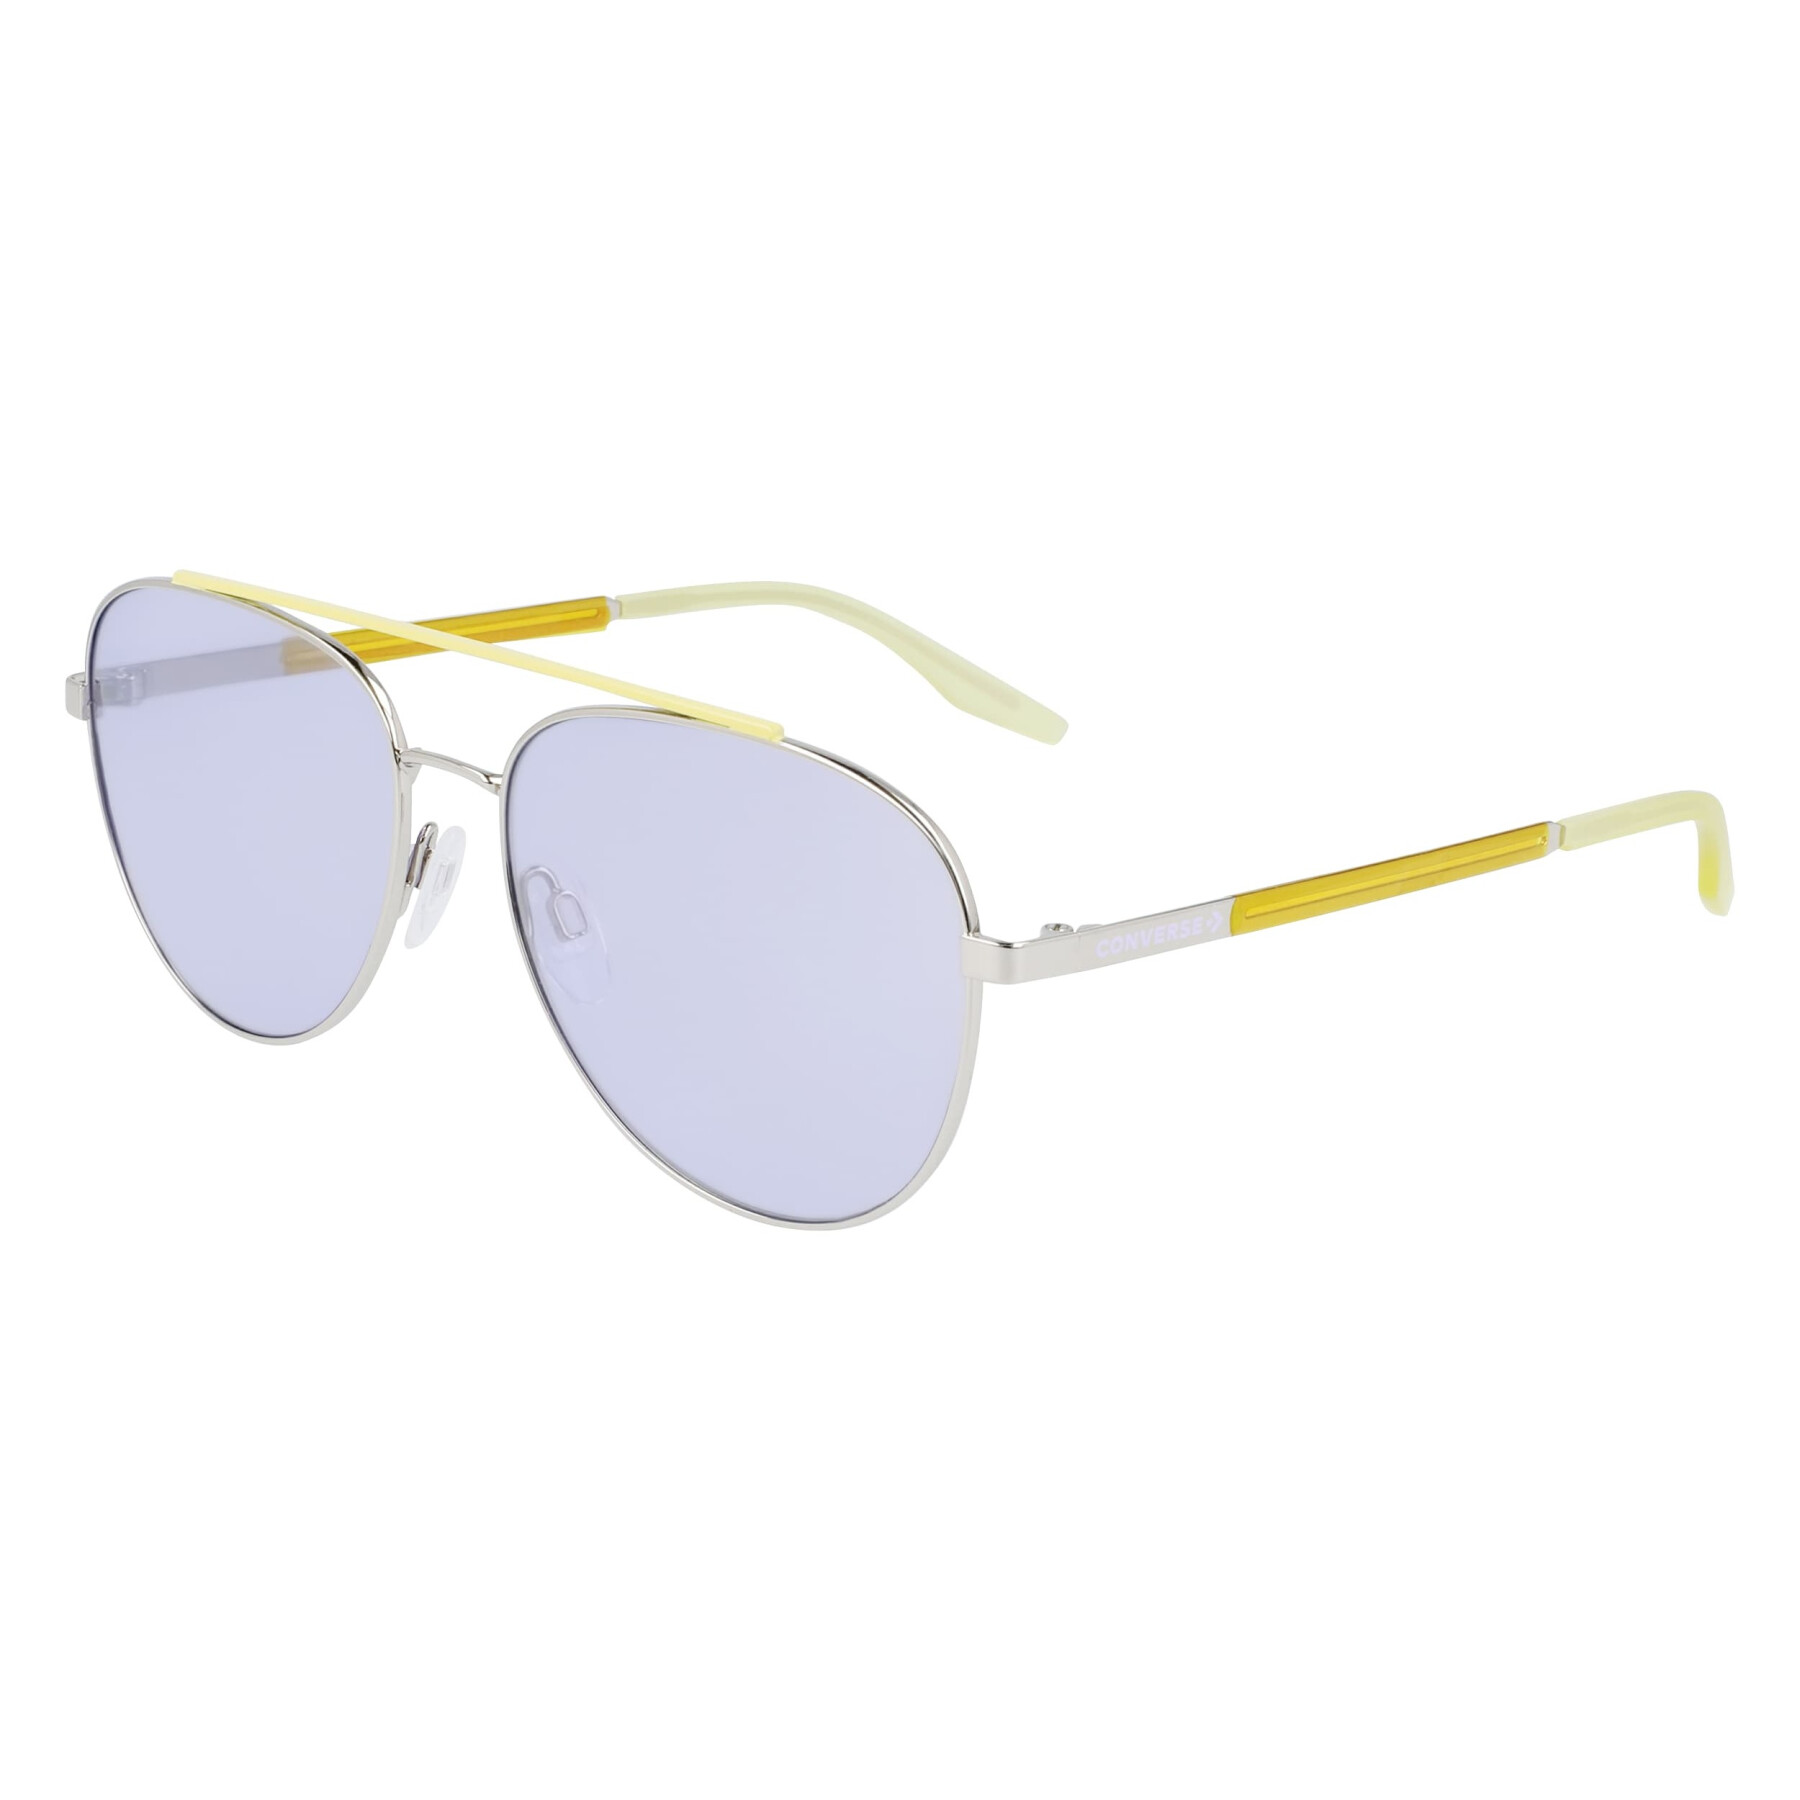 Sunglasses Converse CV100SACT045